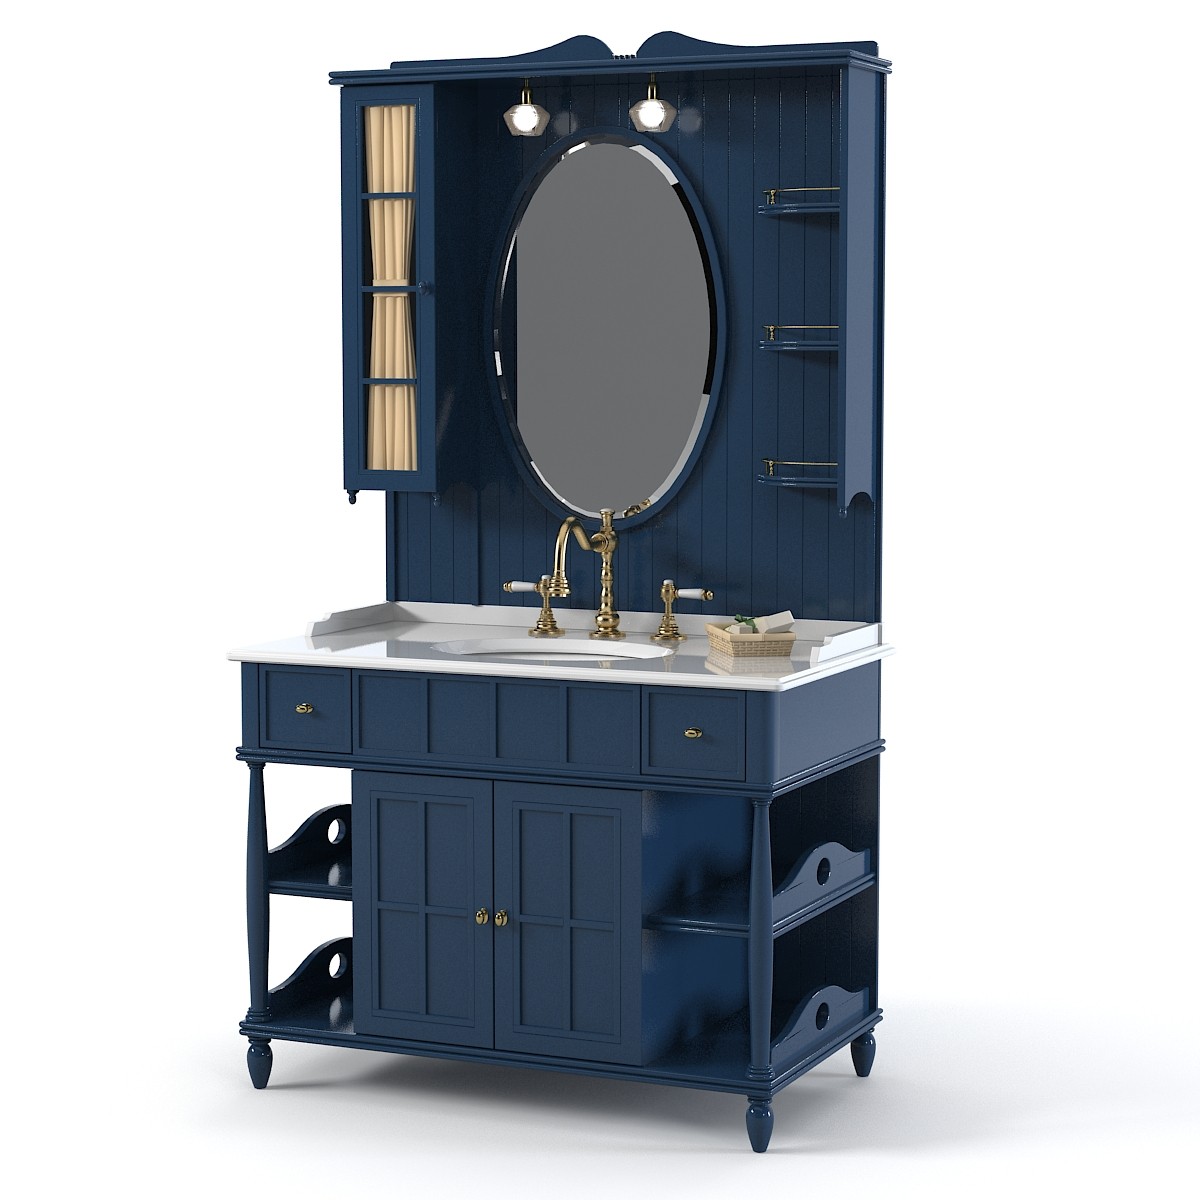 Eurodesign Green&Roses bathroom furniture cabinet lavatory vanity 0001.jpg60a73b58-ab33-4e77-8b16-3a9501248986Original.jpg